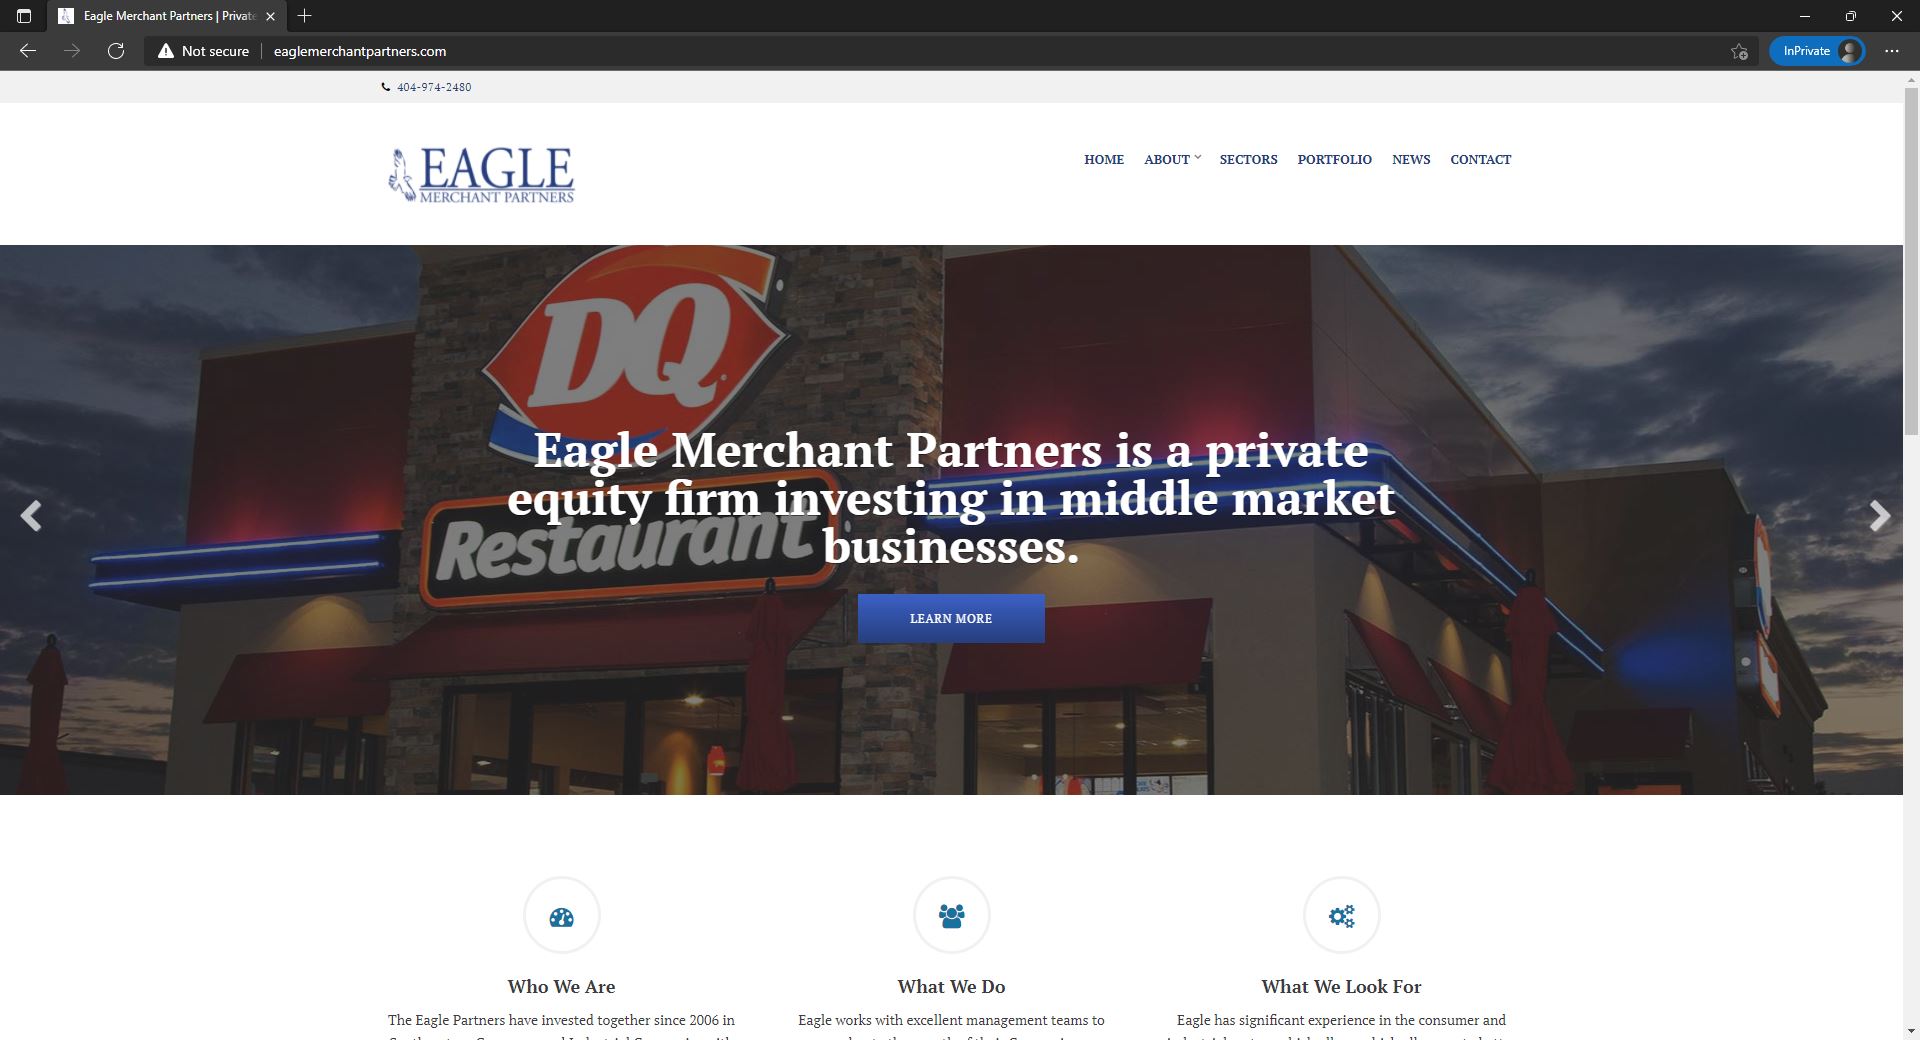 Eagle Merchant Partners website homepage